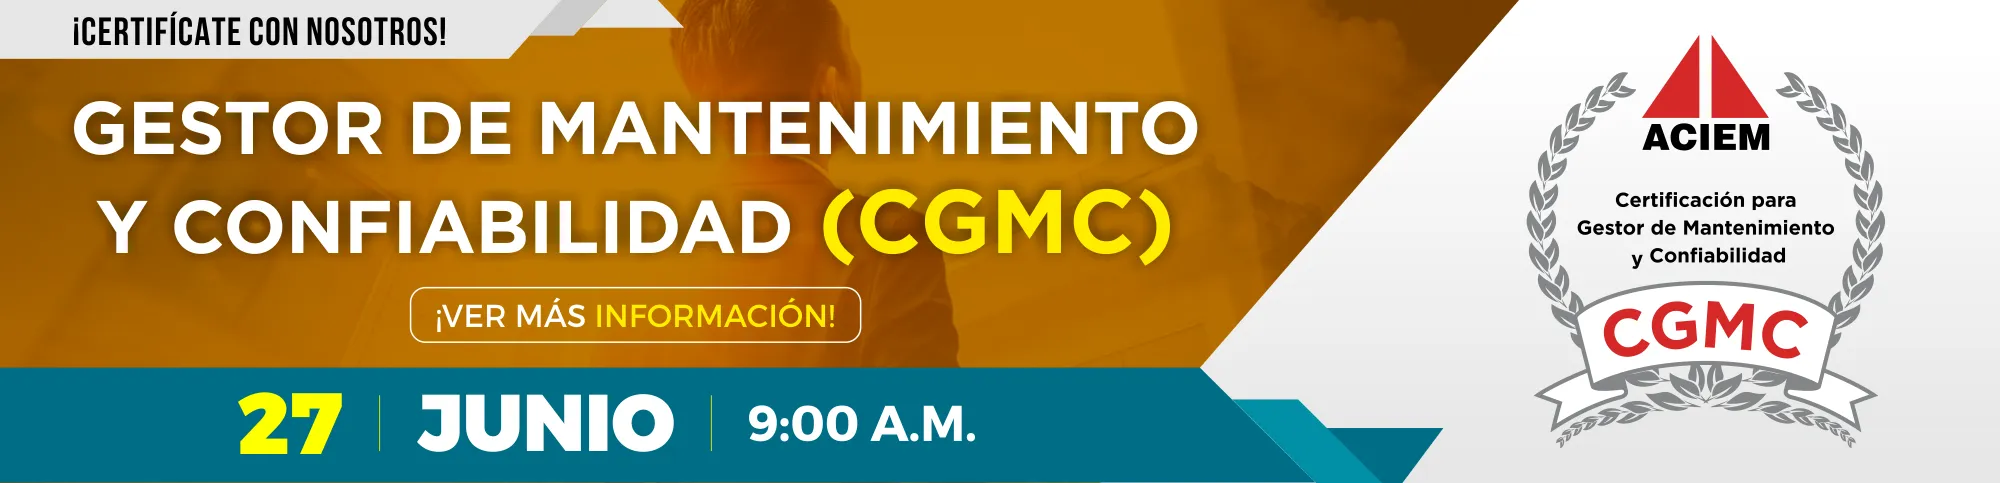 Certificación CGMC